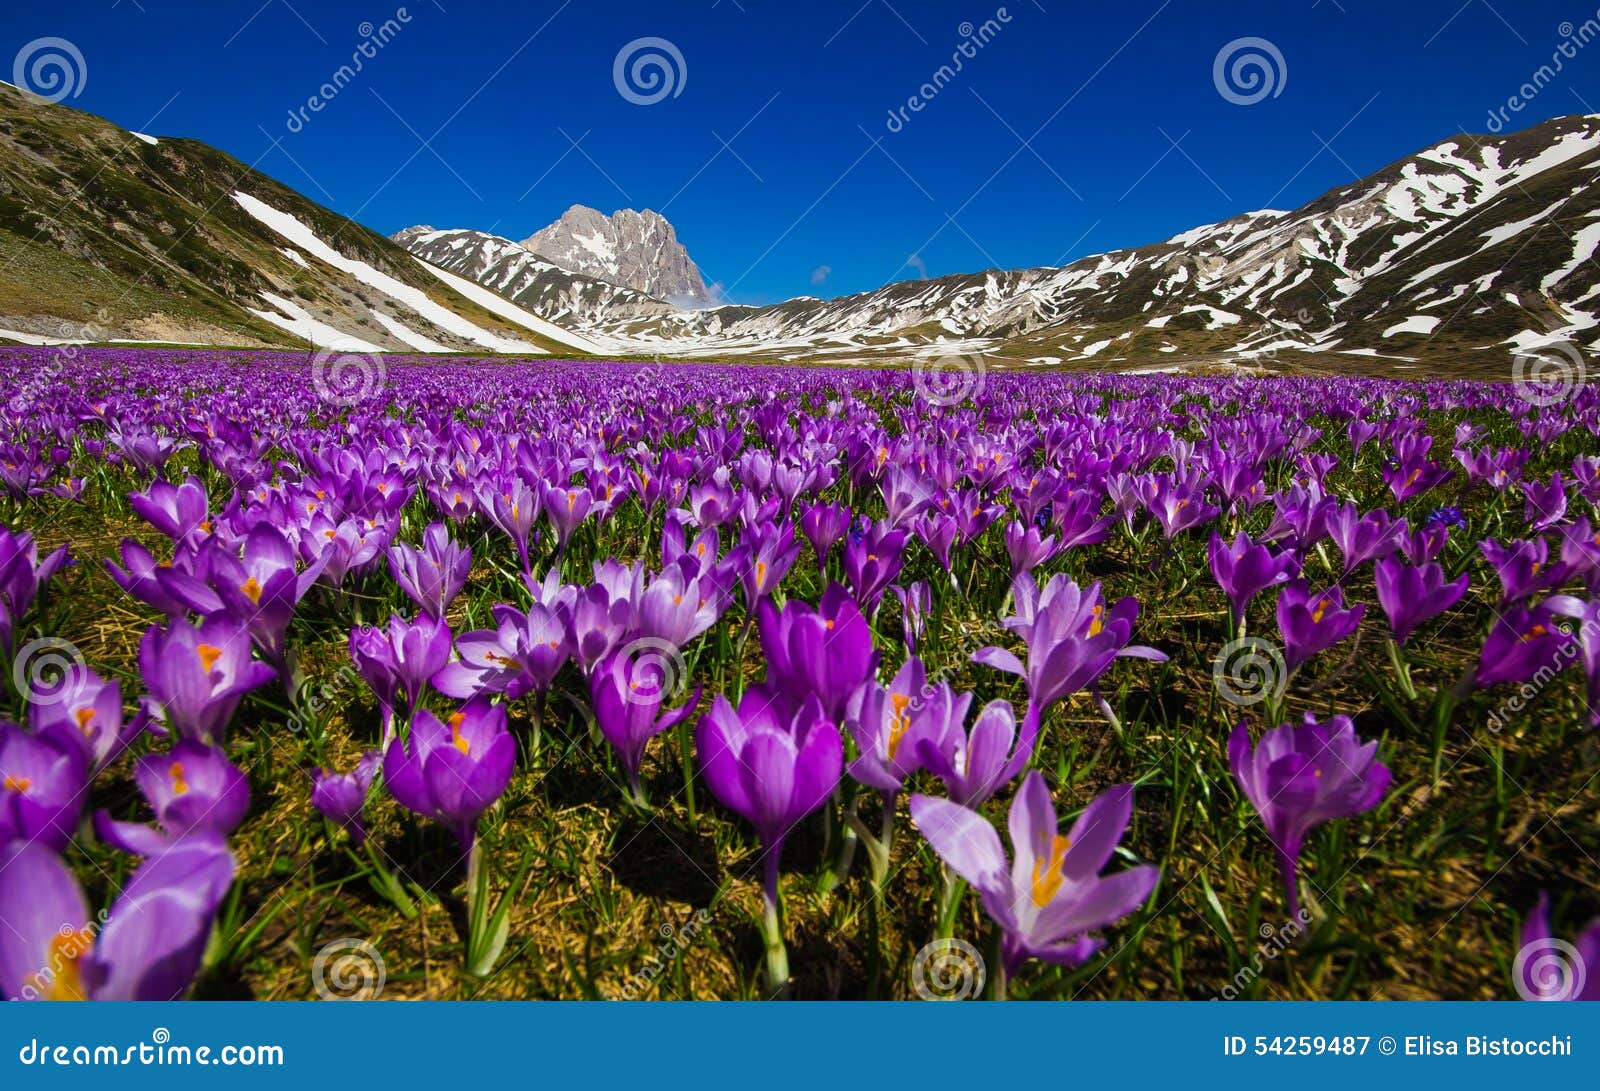 carpet of wild mountain crocus flowers at campo imperatore, abruzzo